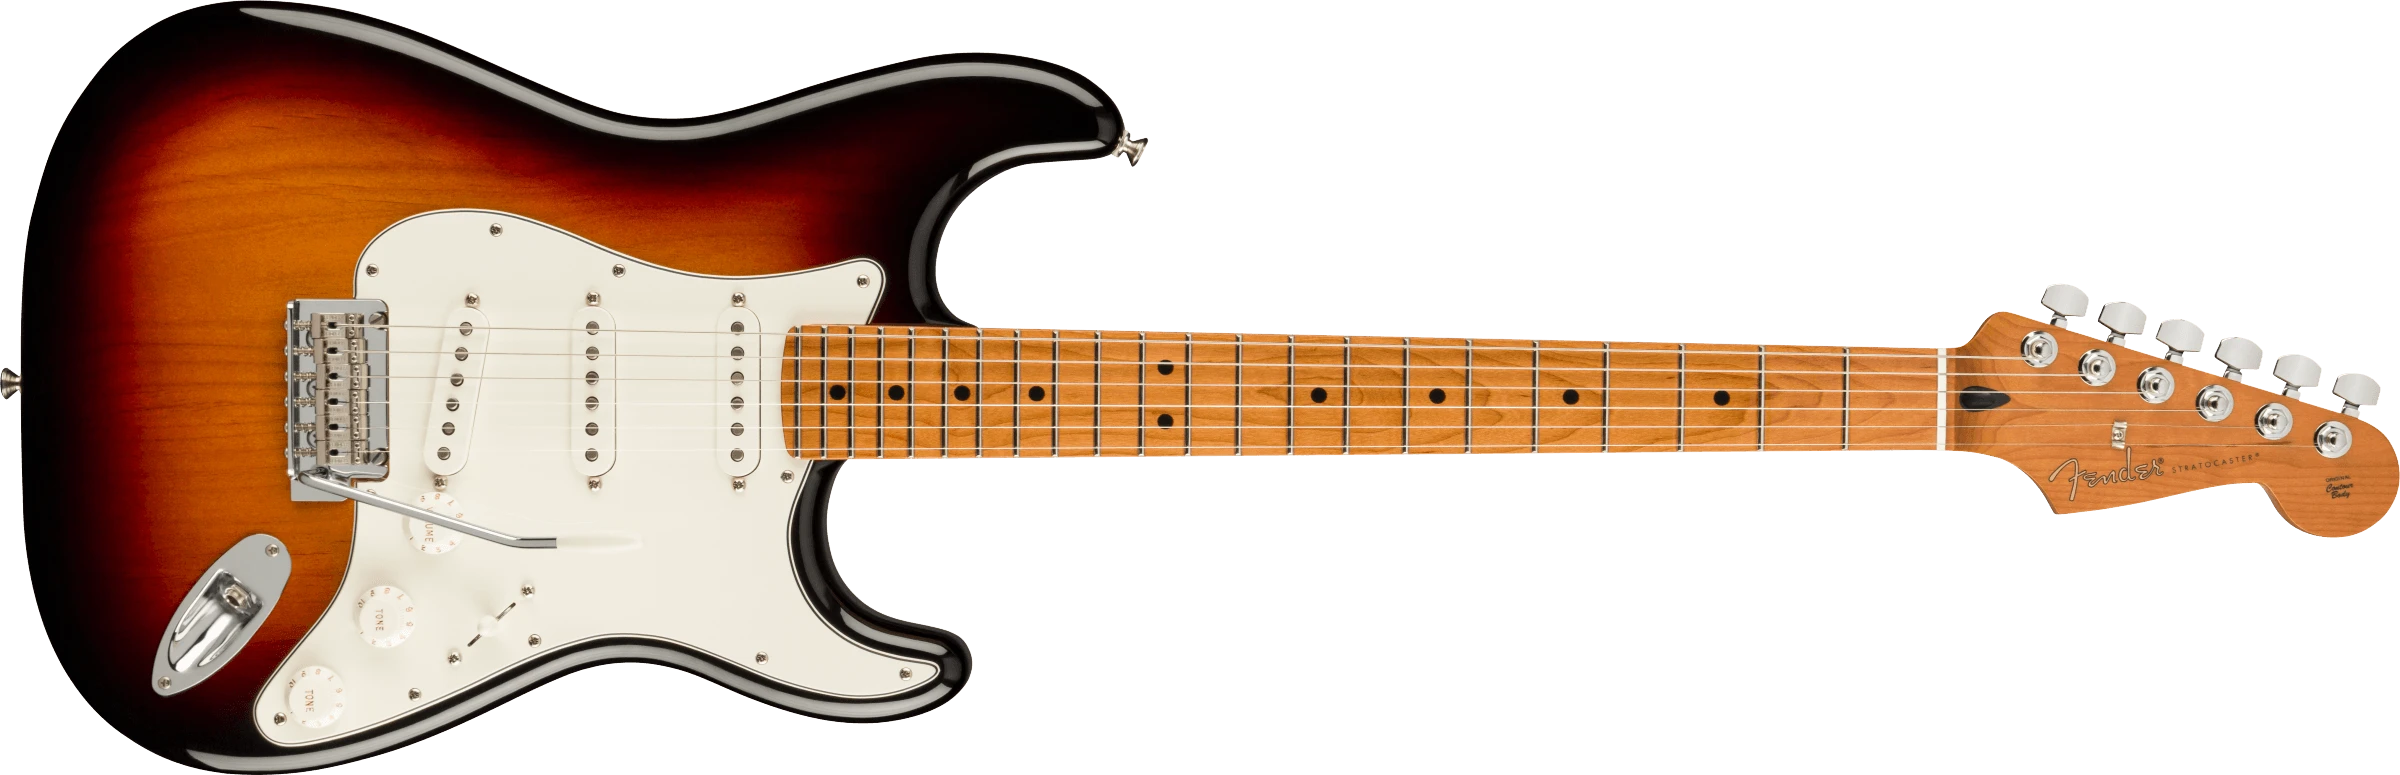 Fender Strat Player 3ts/roasted mn Fat50s LTD